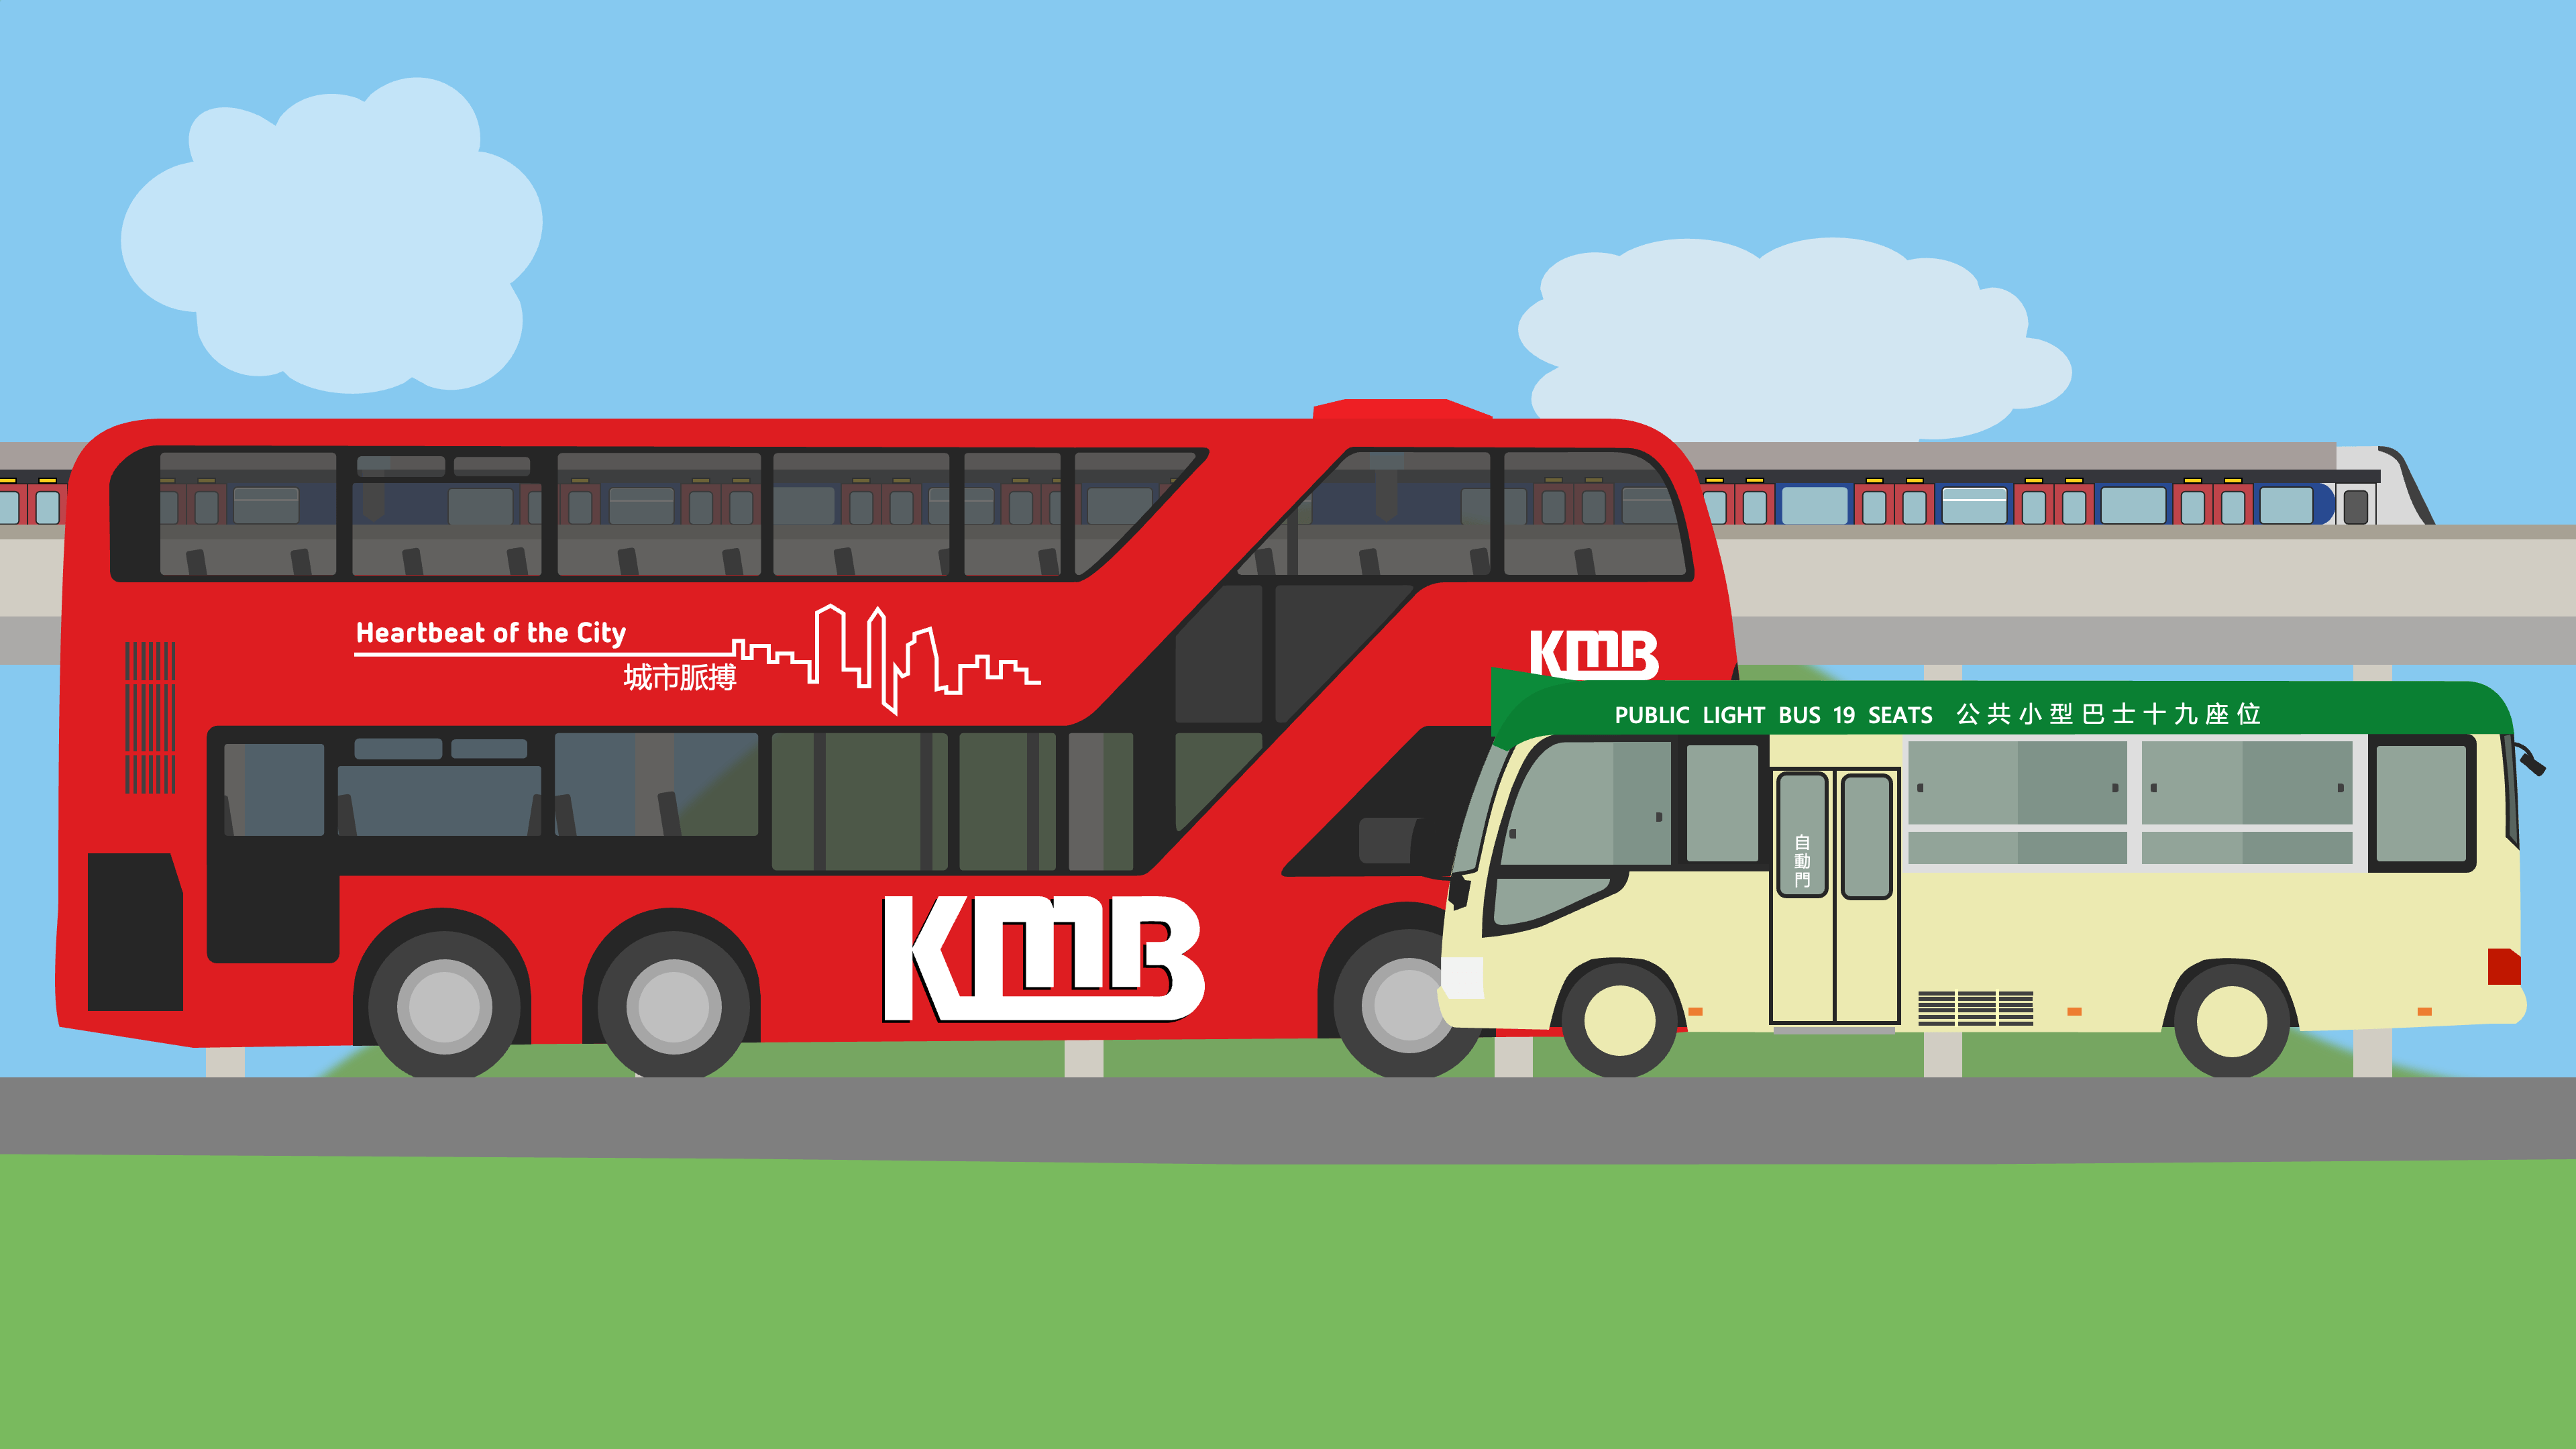 A KMB double-decker bus, a green minibus, and an MTR train